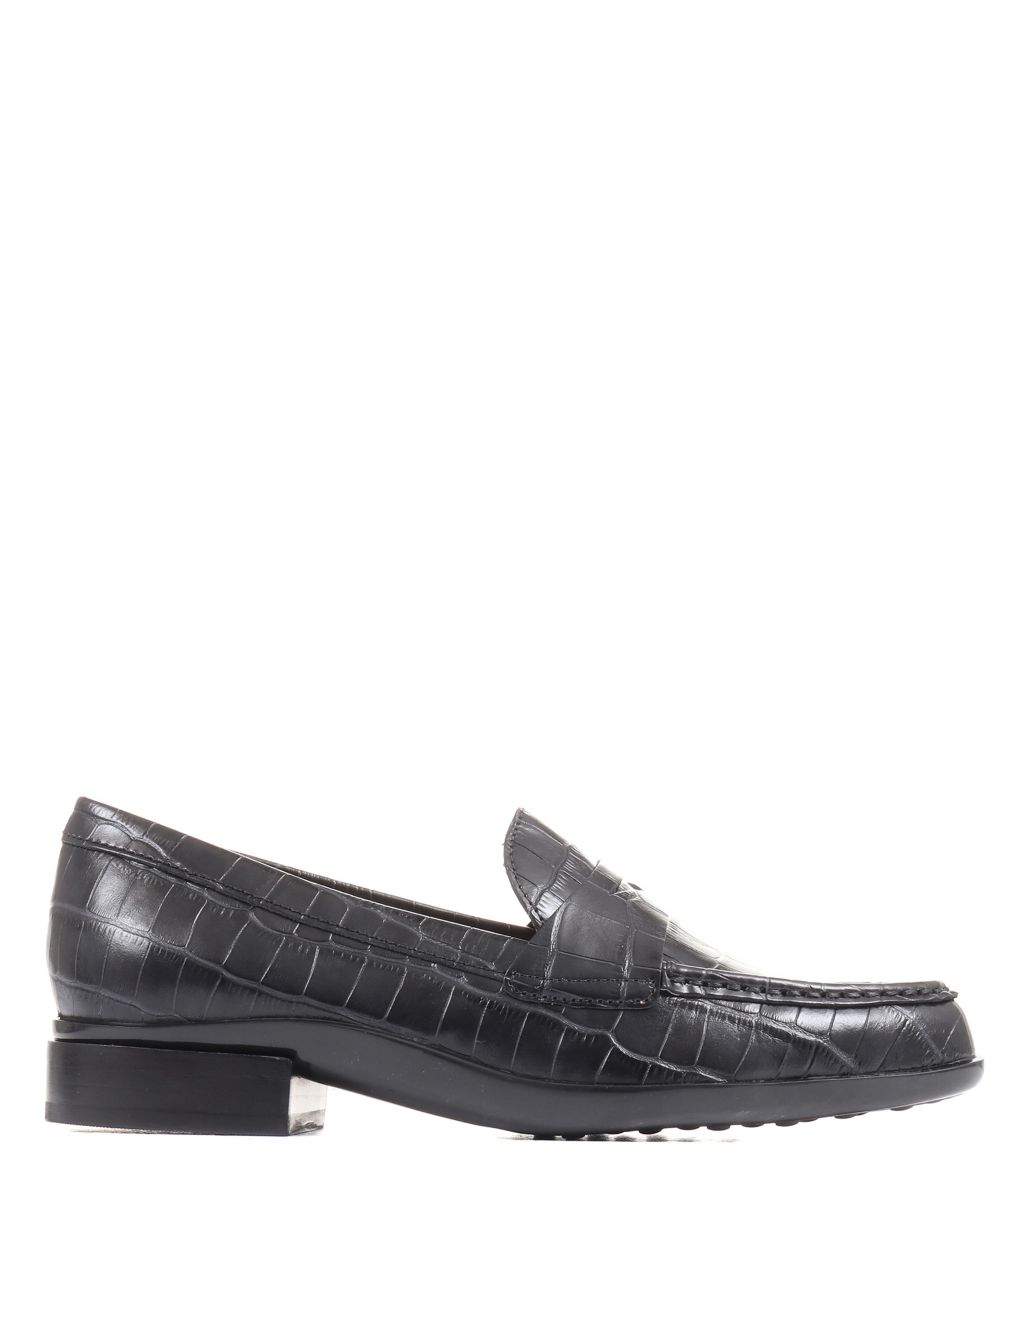 Leather Flat Loafers | Jones Bootmaker | M&S